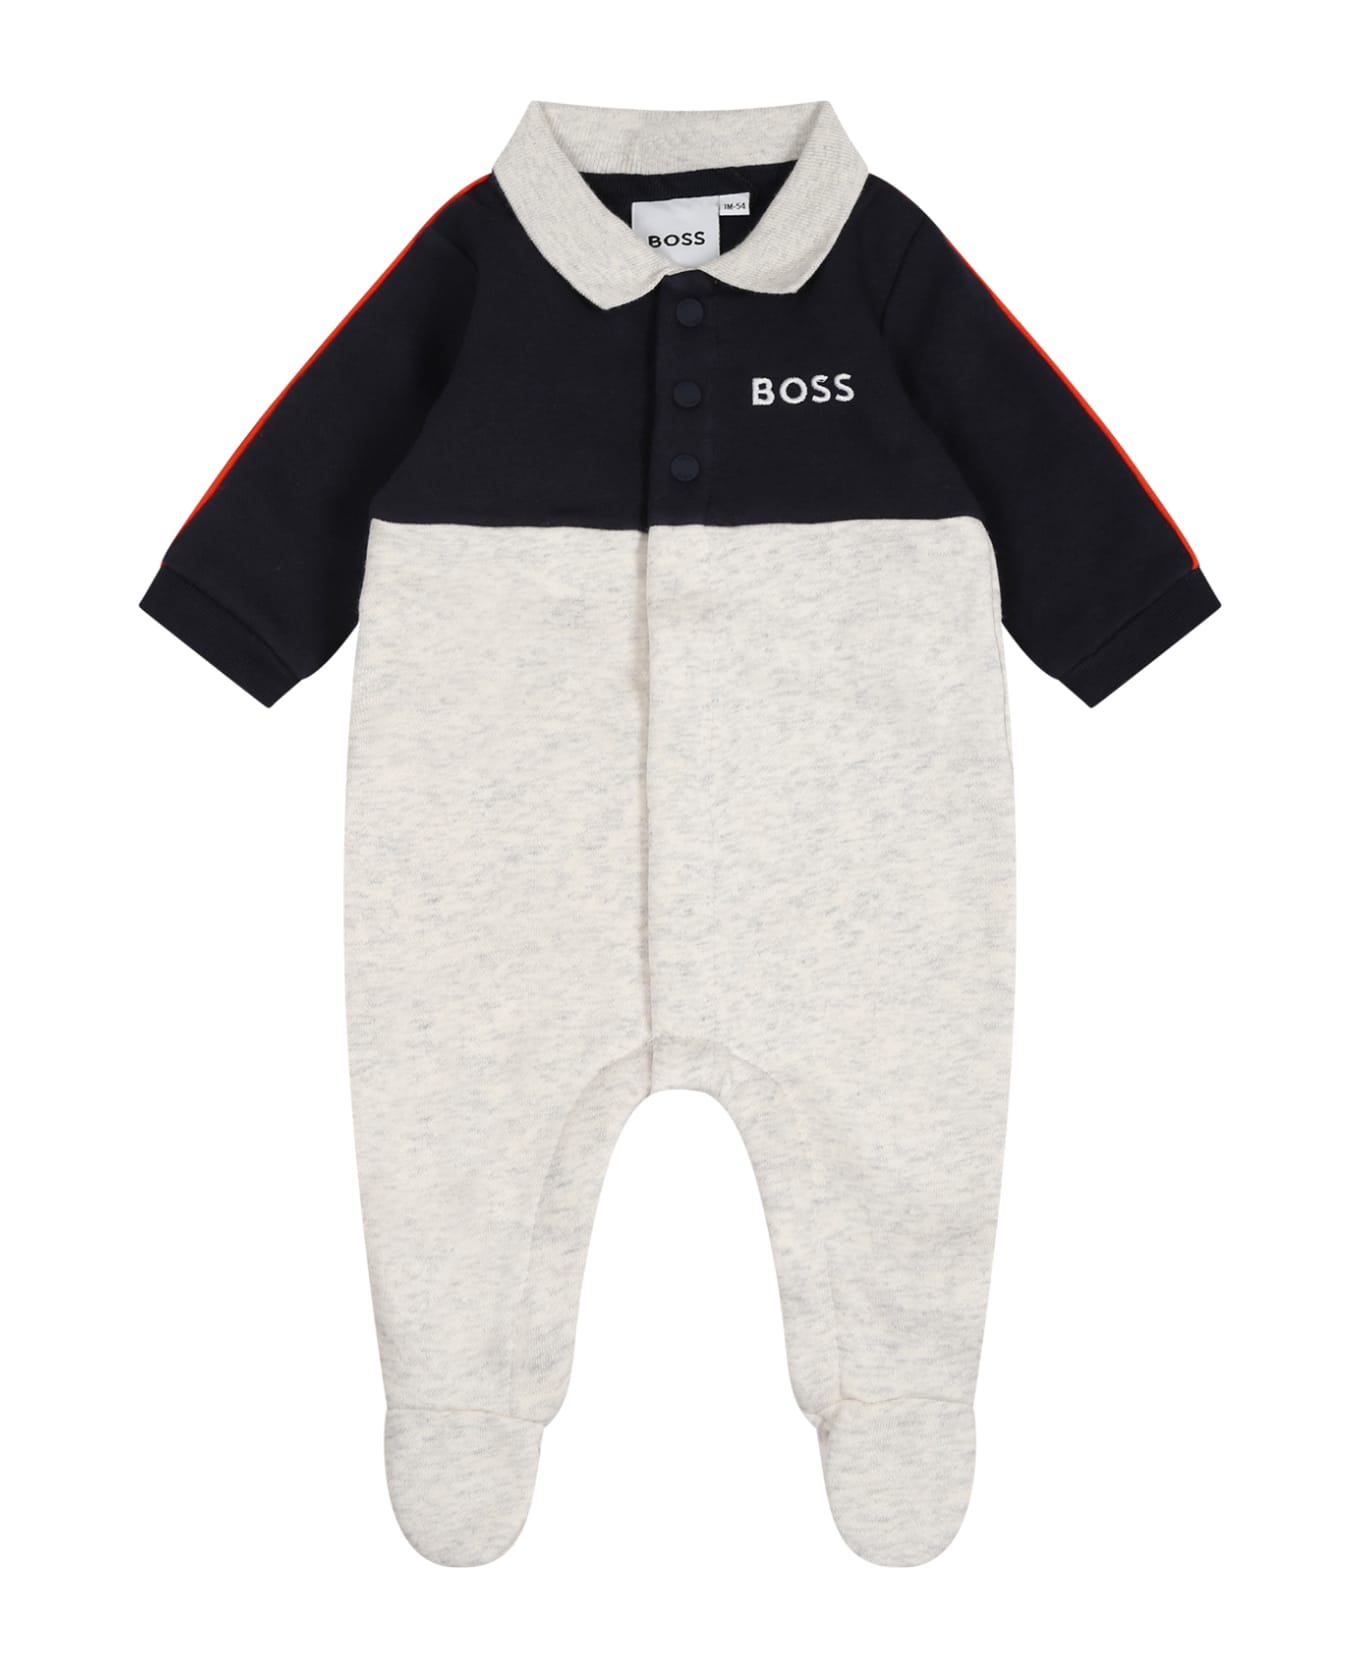 Hugo Boss Grey Babygrow For Baby Boy With Logo - Multicolor